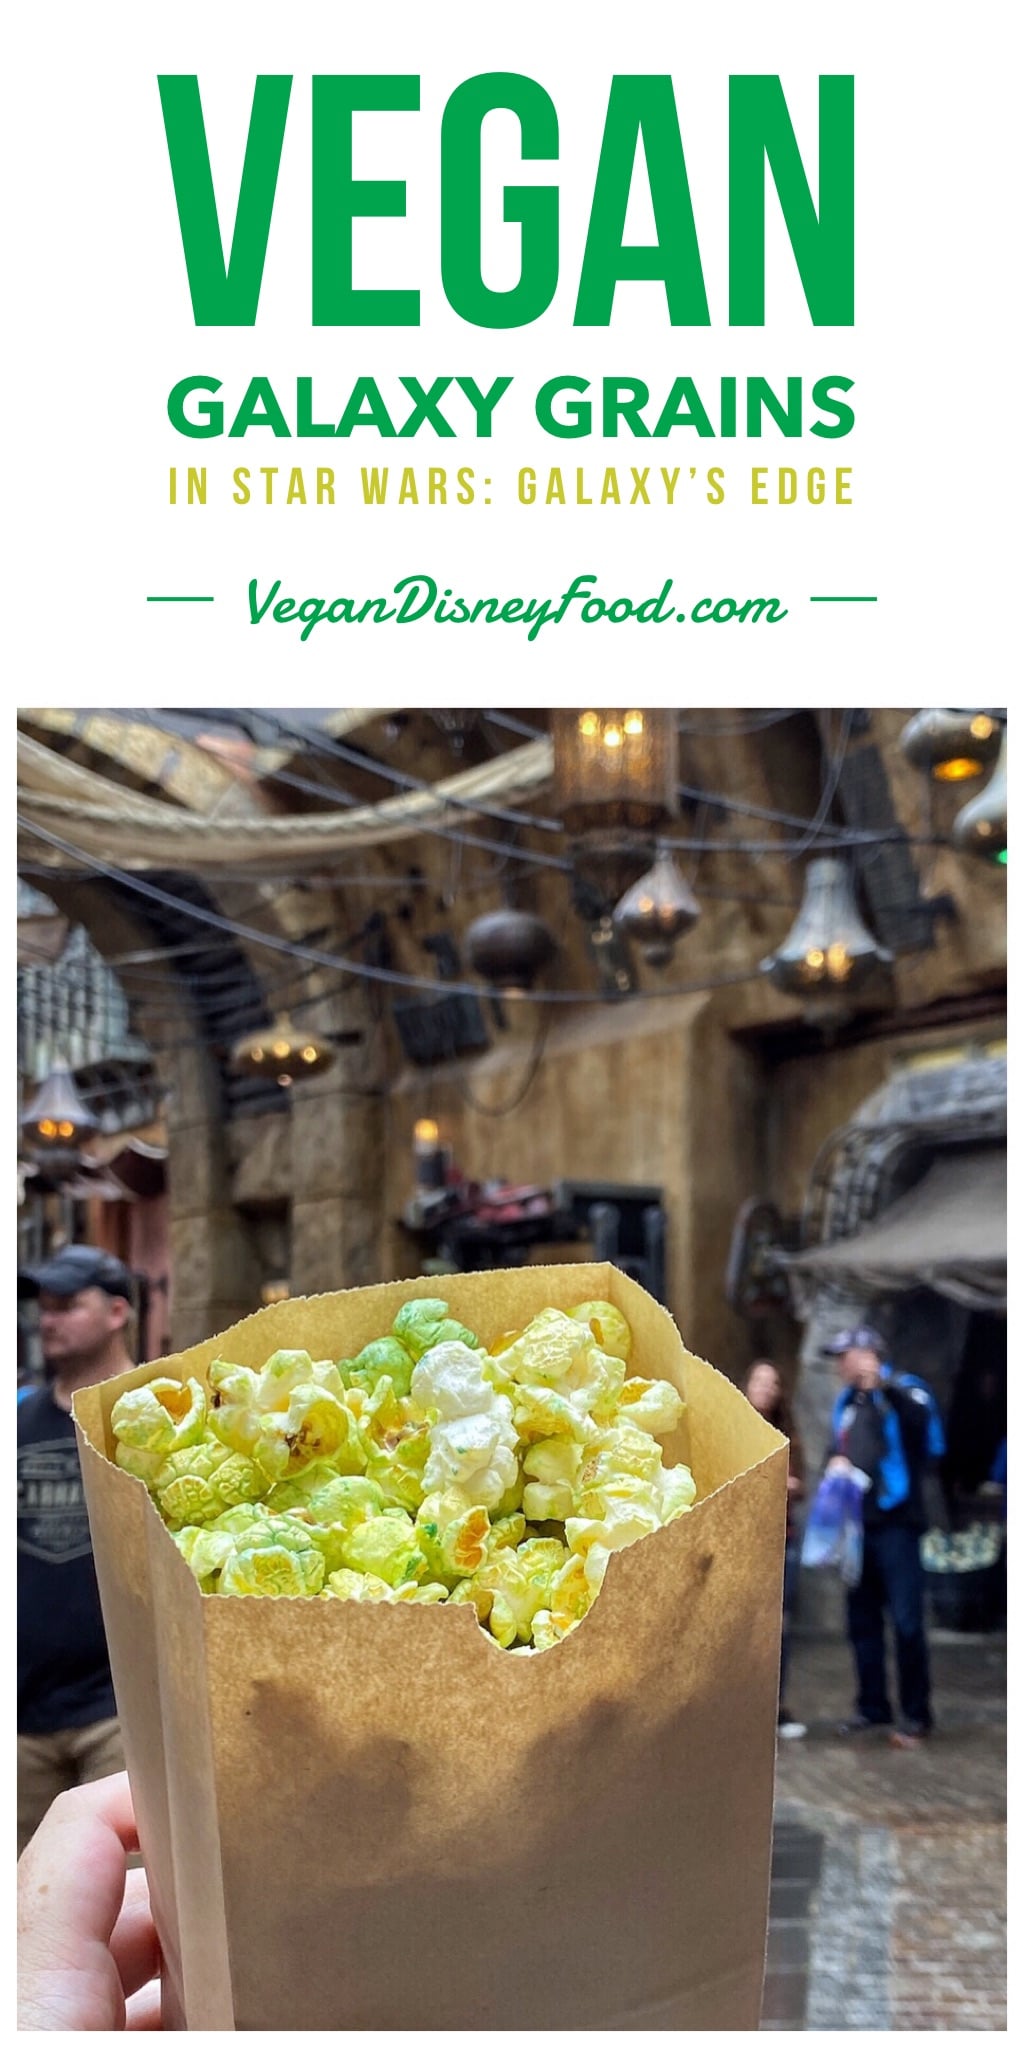 Vegan Galaxy Grains Popcorn in Star Wars Galaxy’s Edge at Walt Disney World